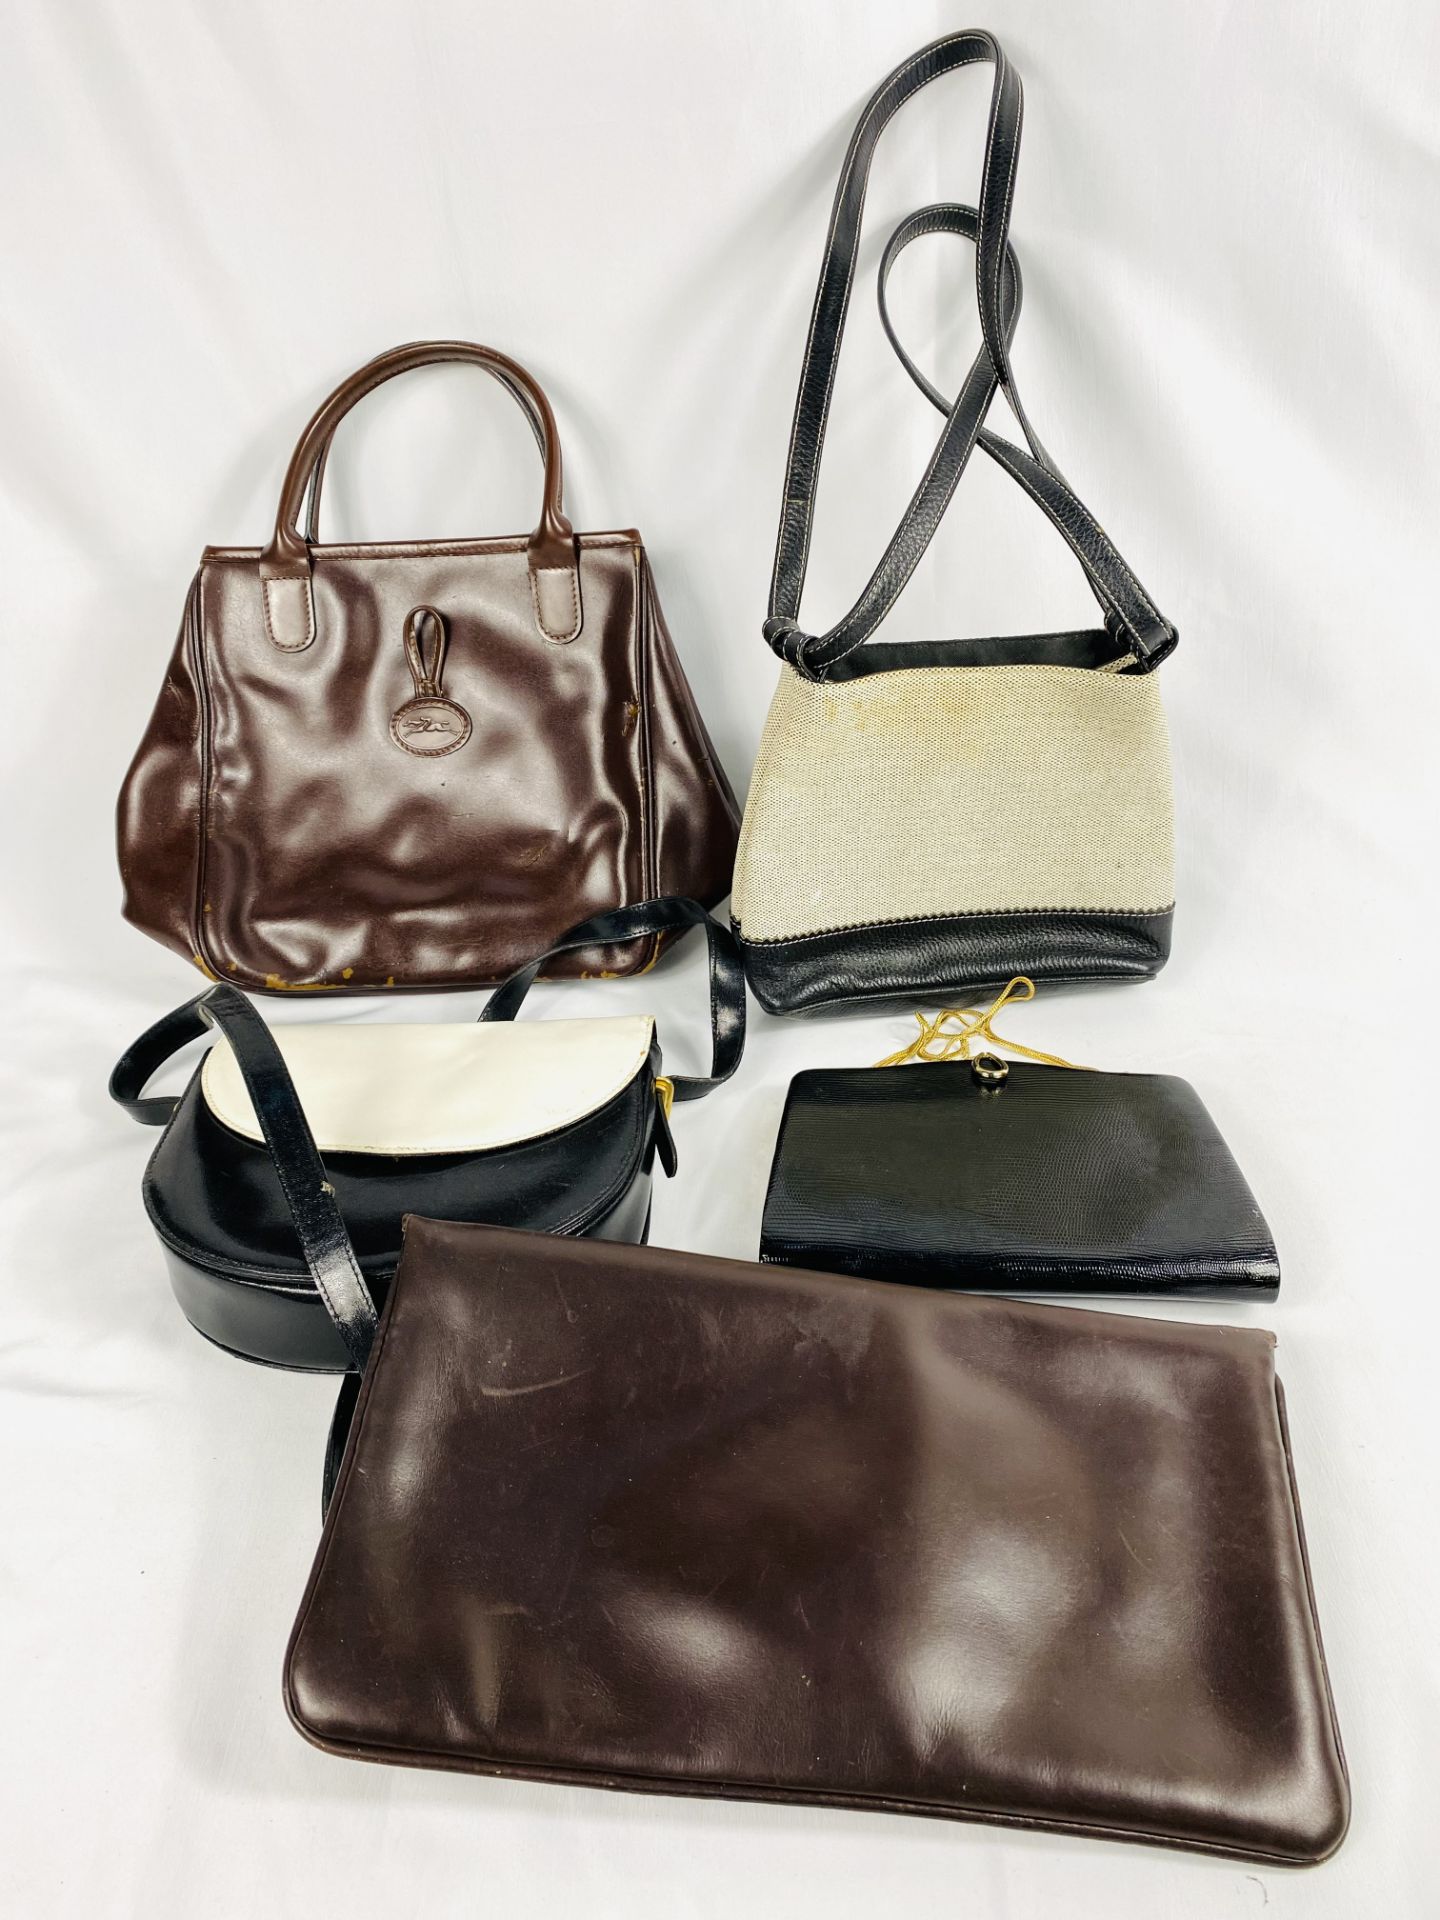 Five fashion handbags